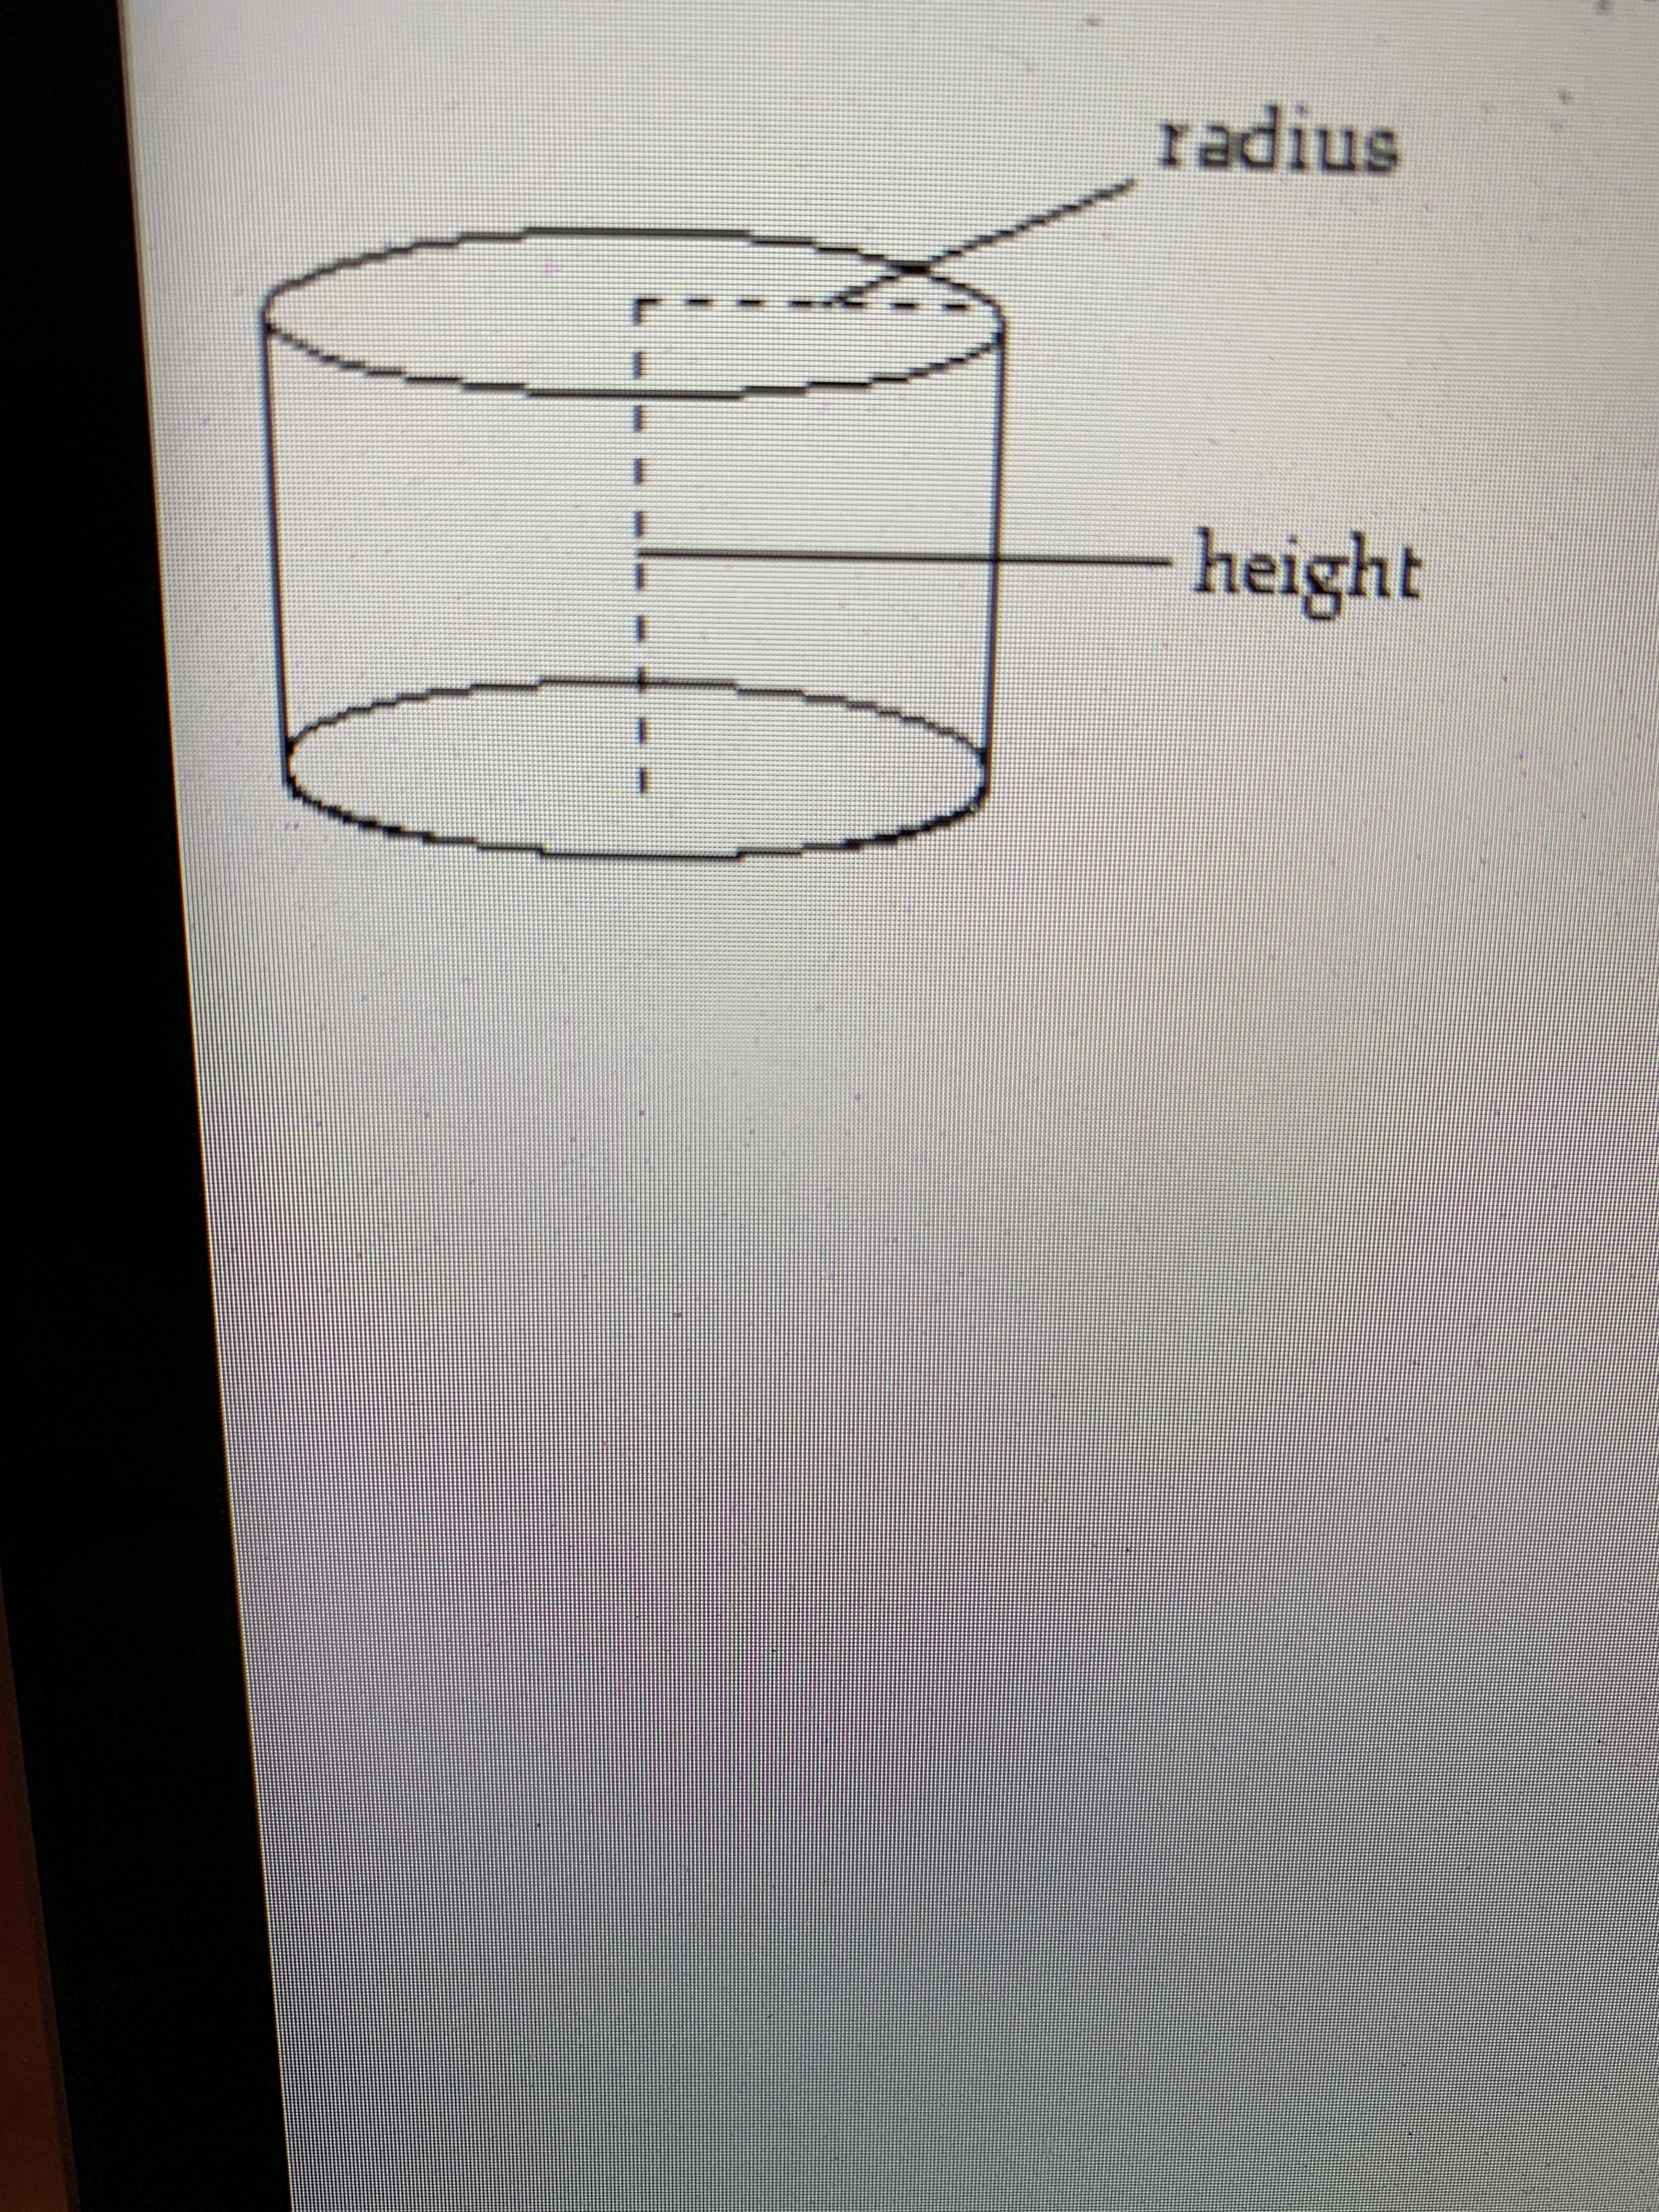 radius
height
